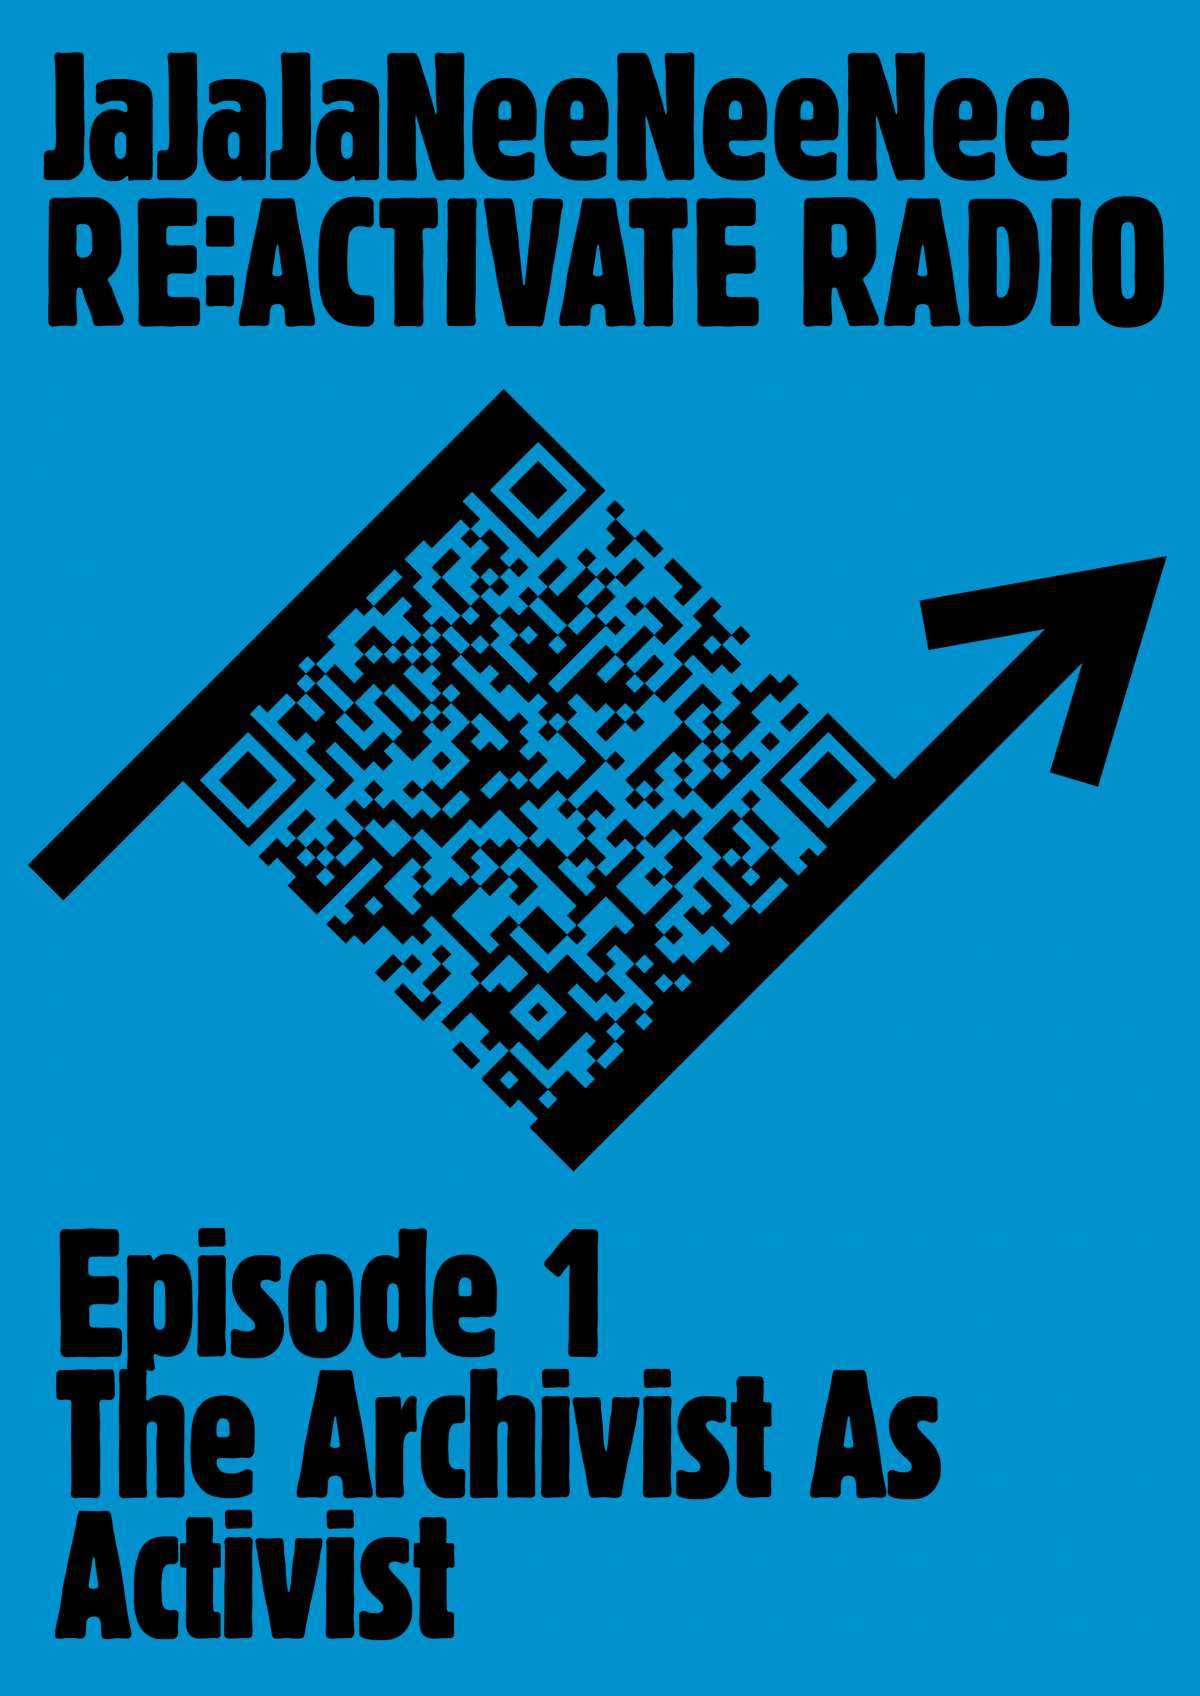 REACTIVATE RADIO Episode 1 Open Archief